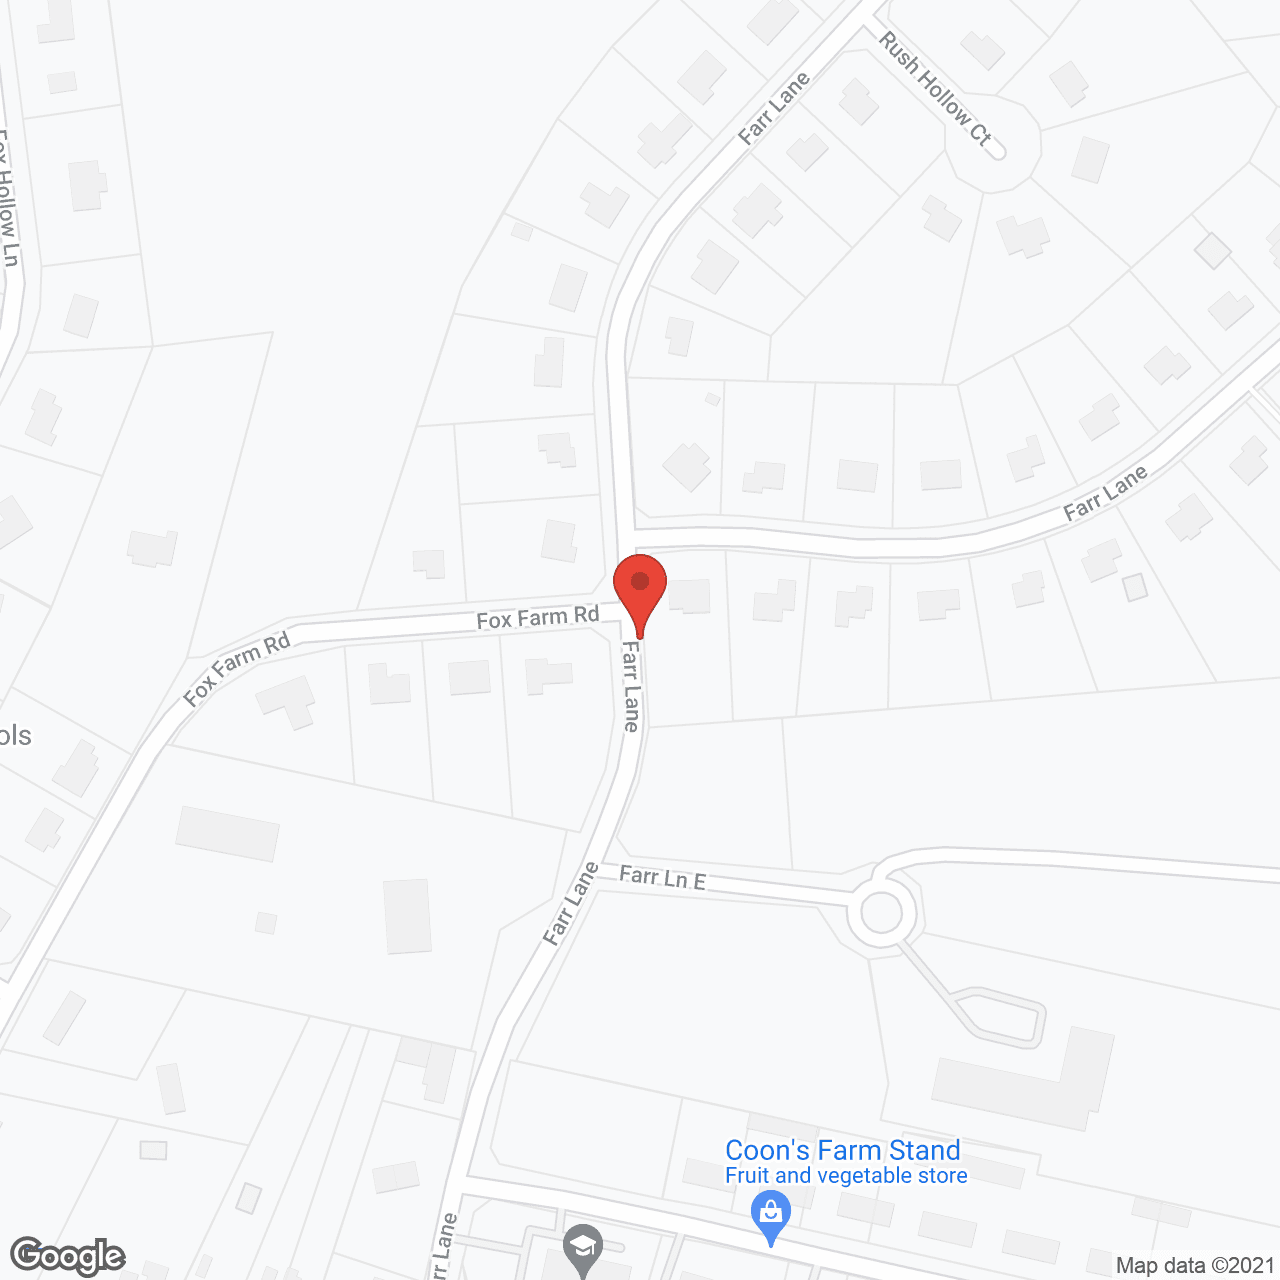 Solomon Heights in google map